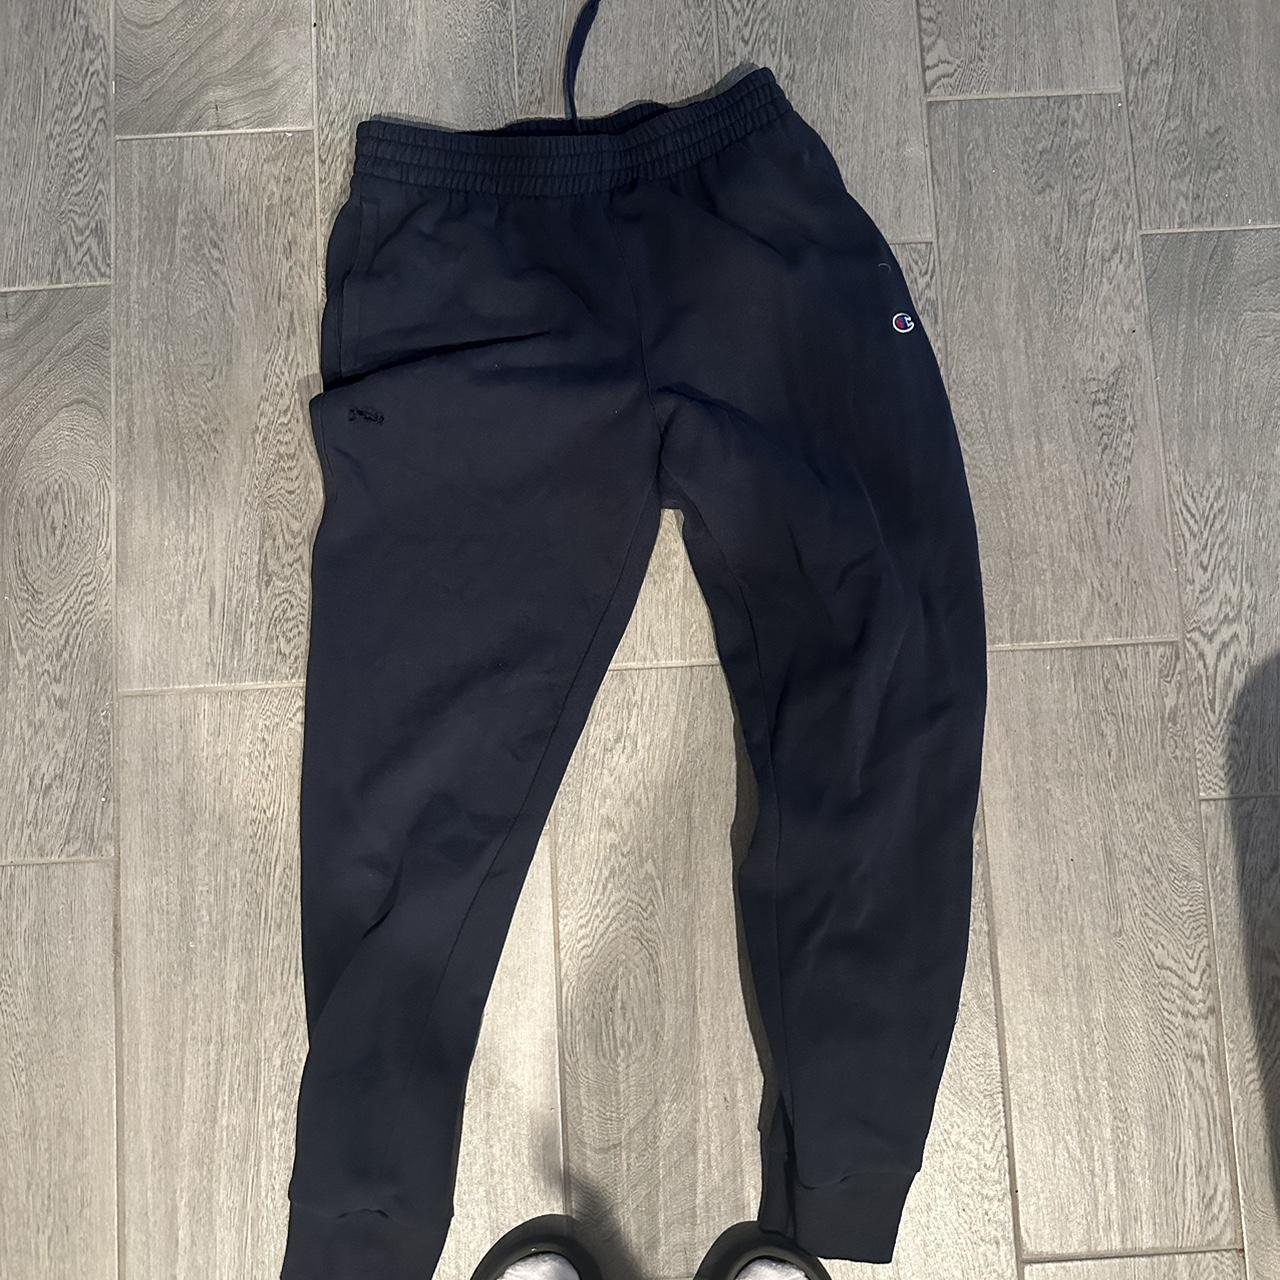 navy blue champion sweatpants 7/10 condition - Depop